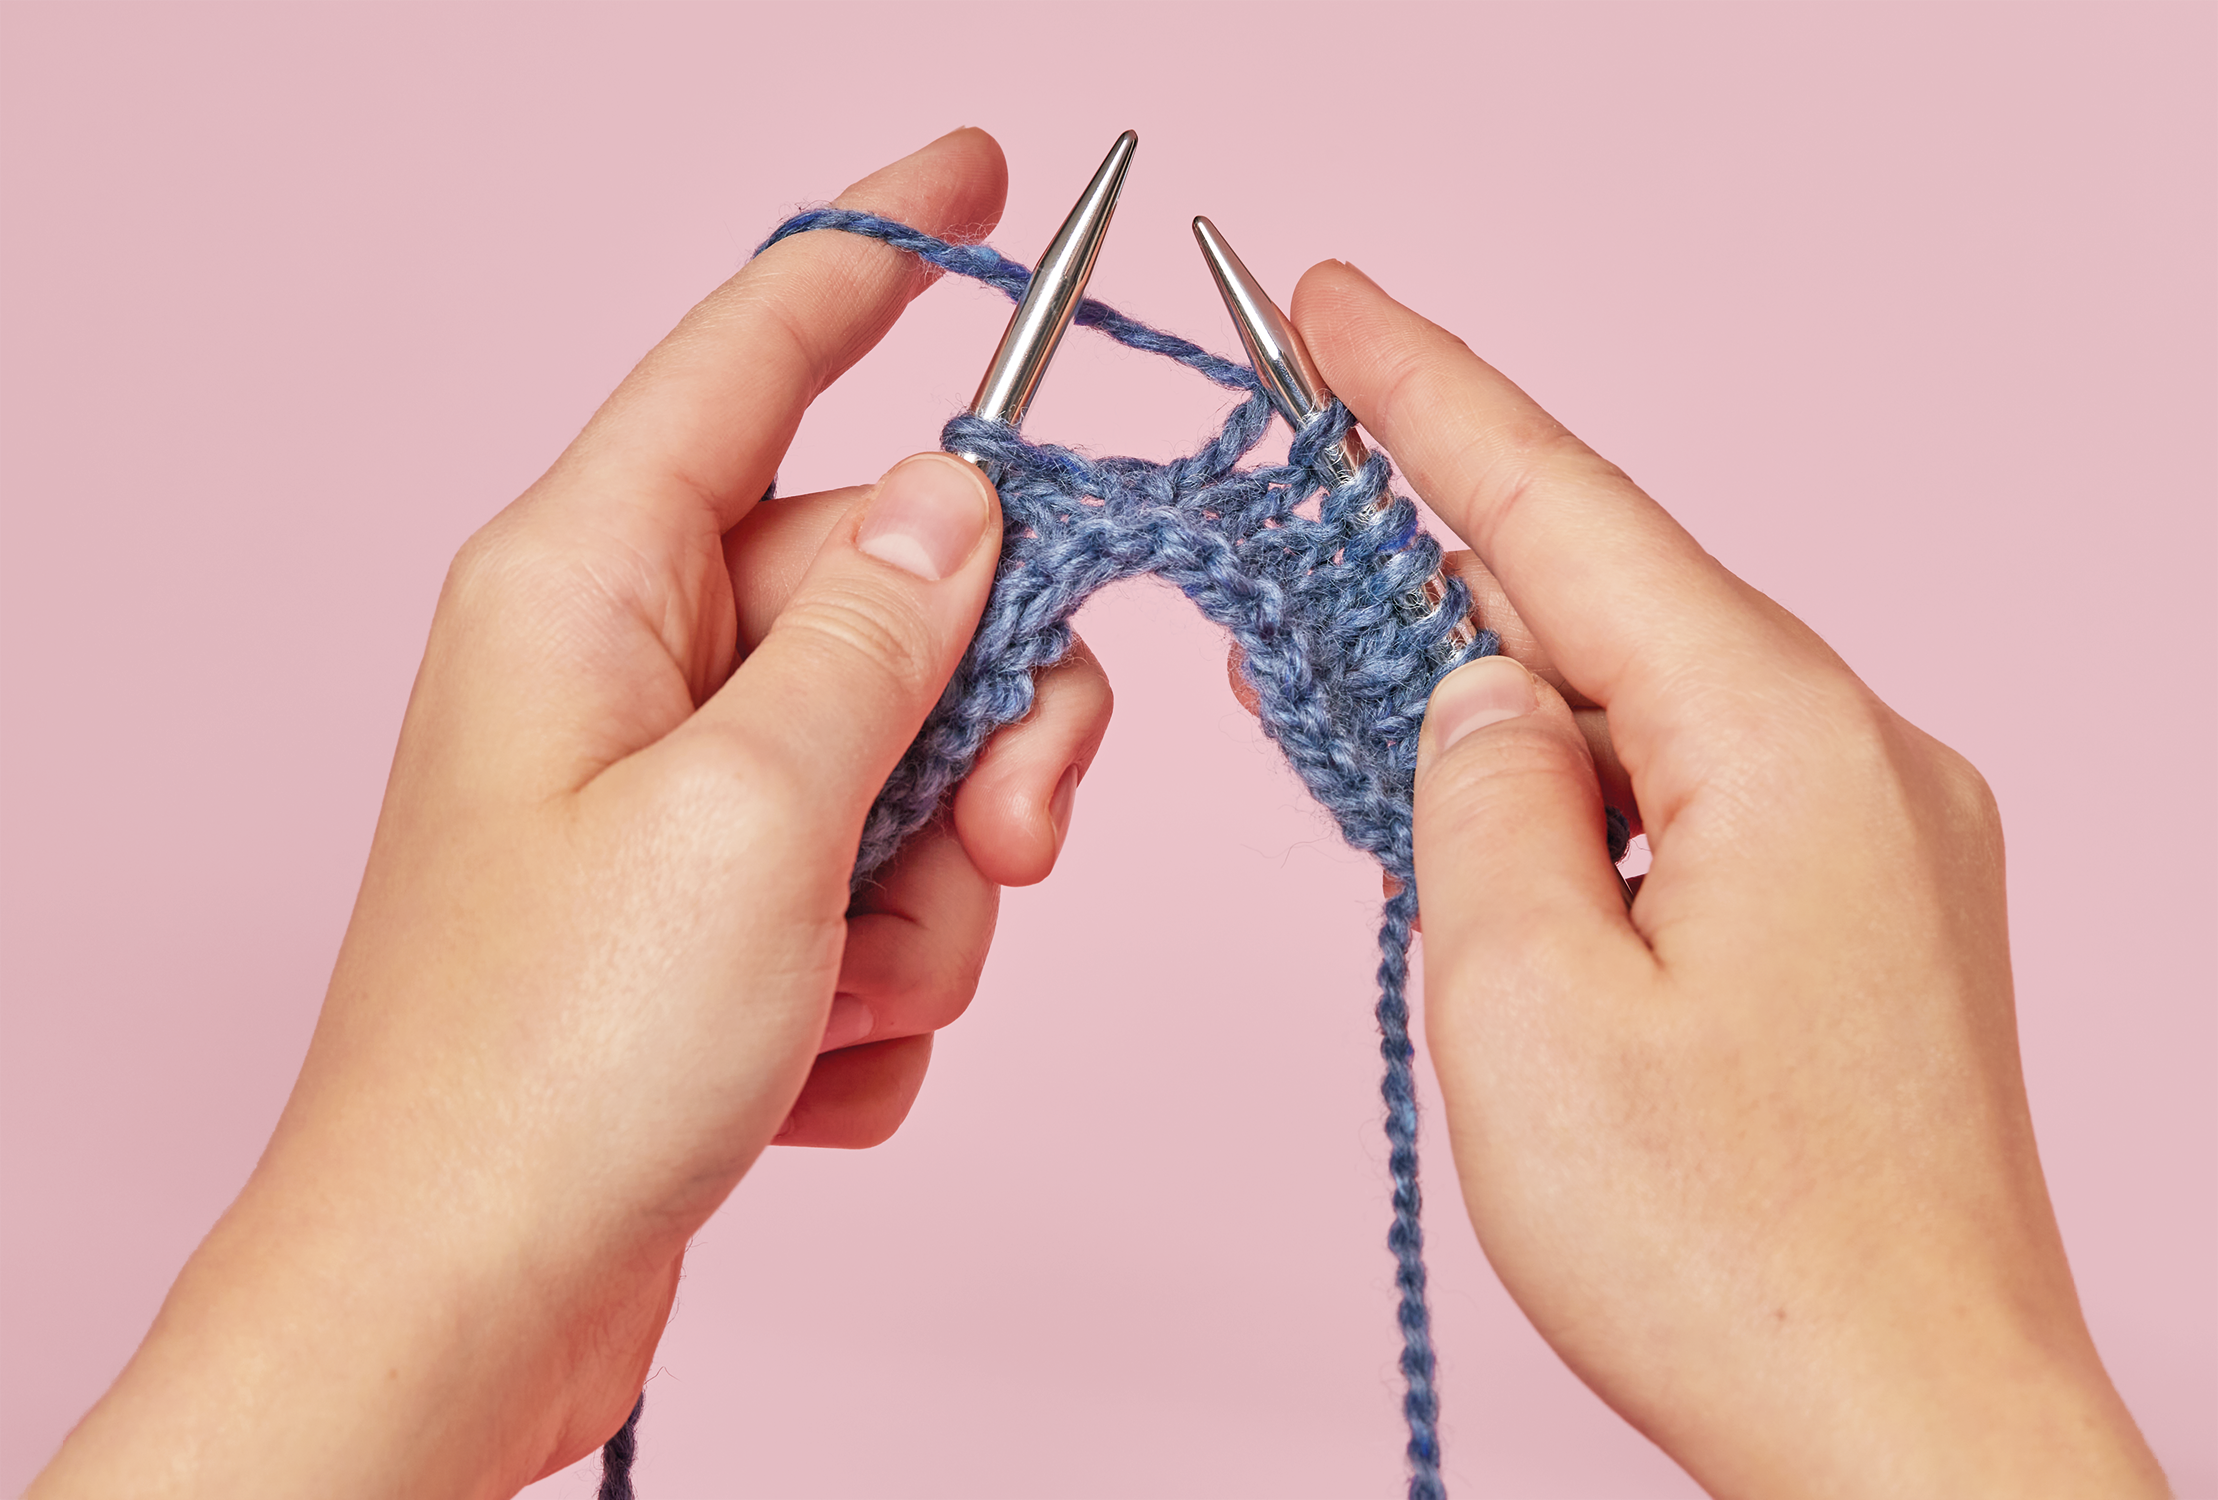 My favorite tool: a 9 circular knitting needle - Shiny Happy World